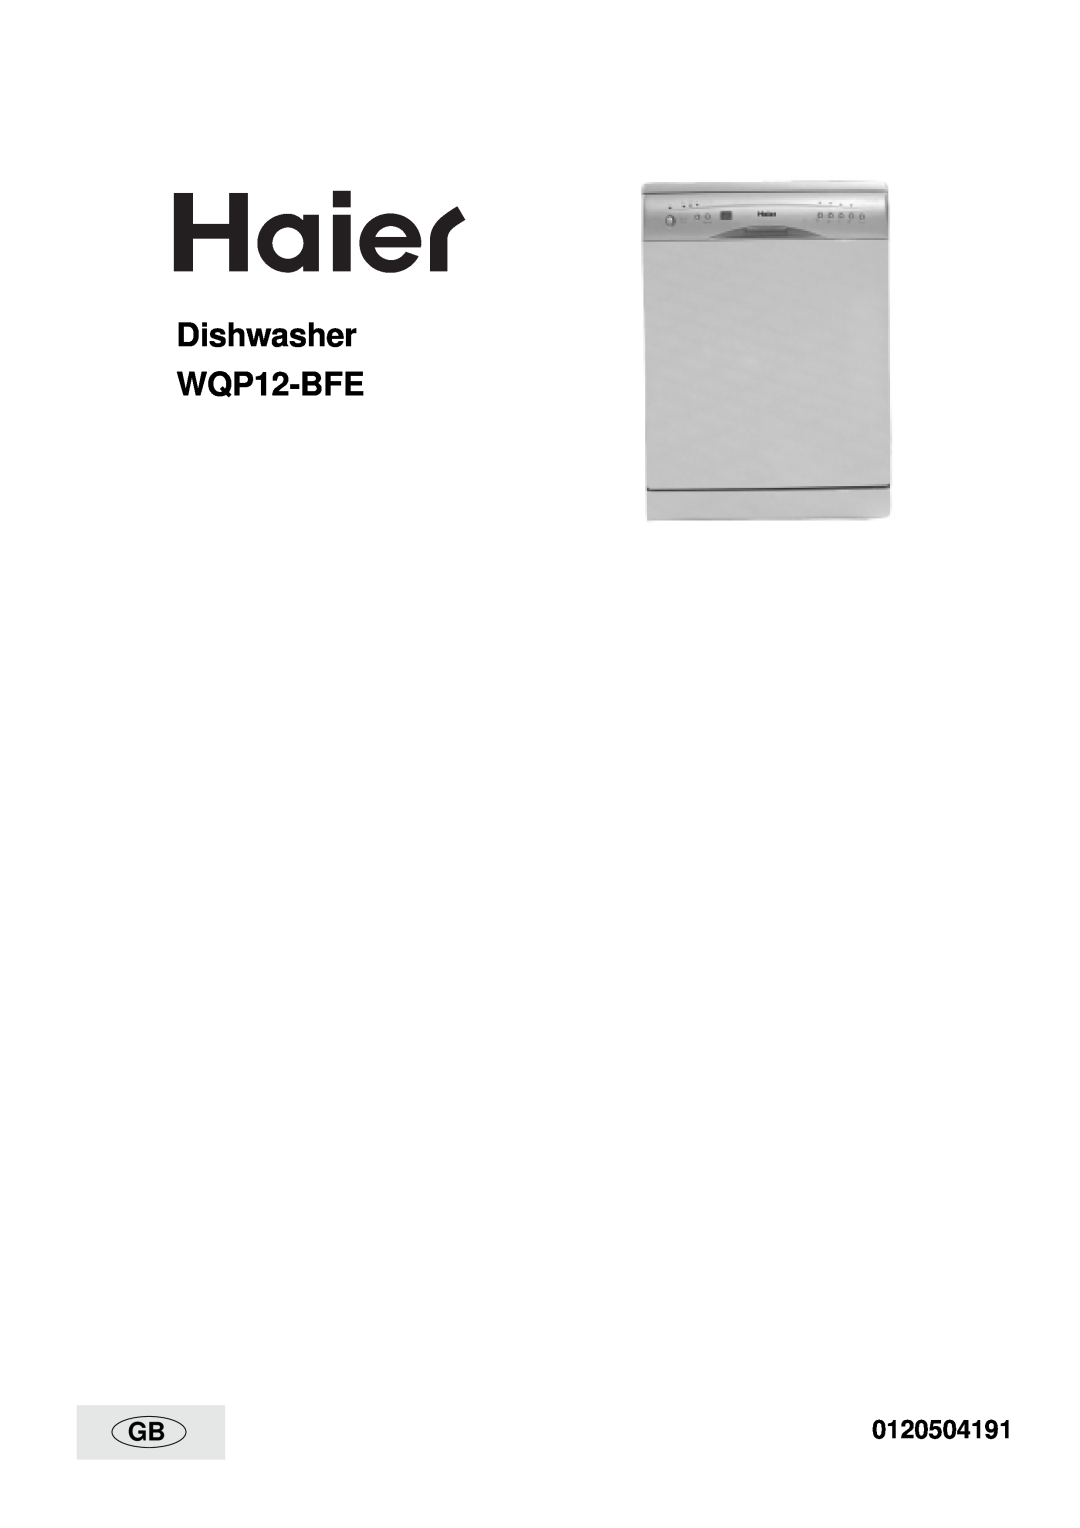 Haier manual 0120504191, Dishwasher WQP12-BFE 